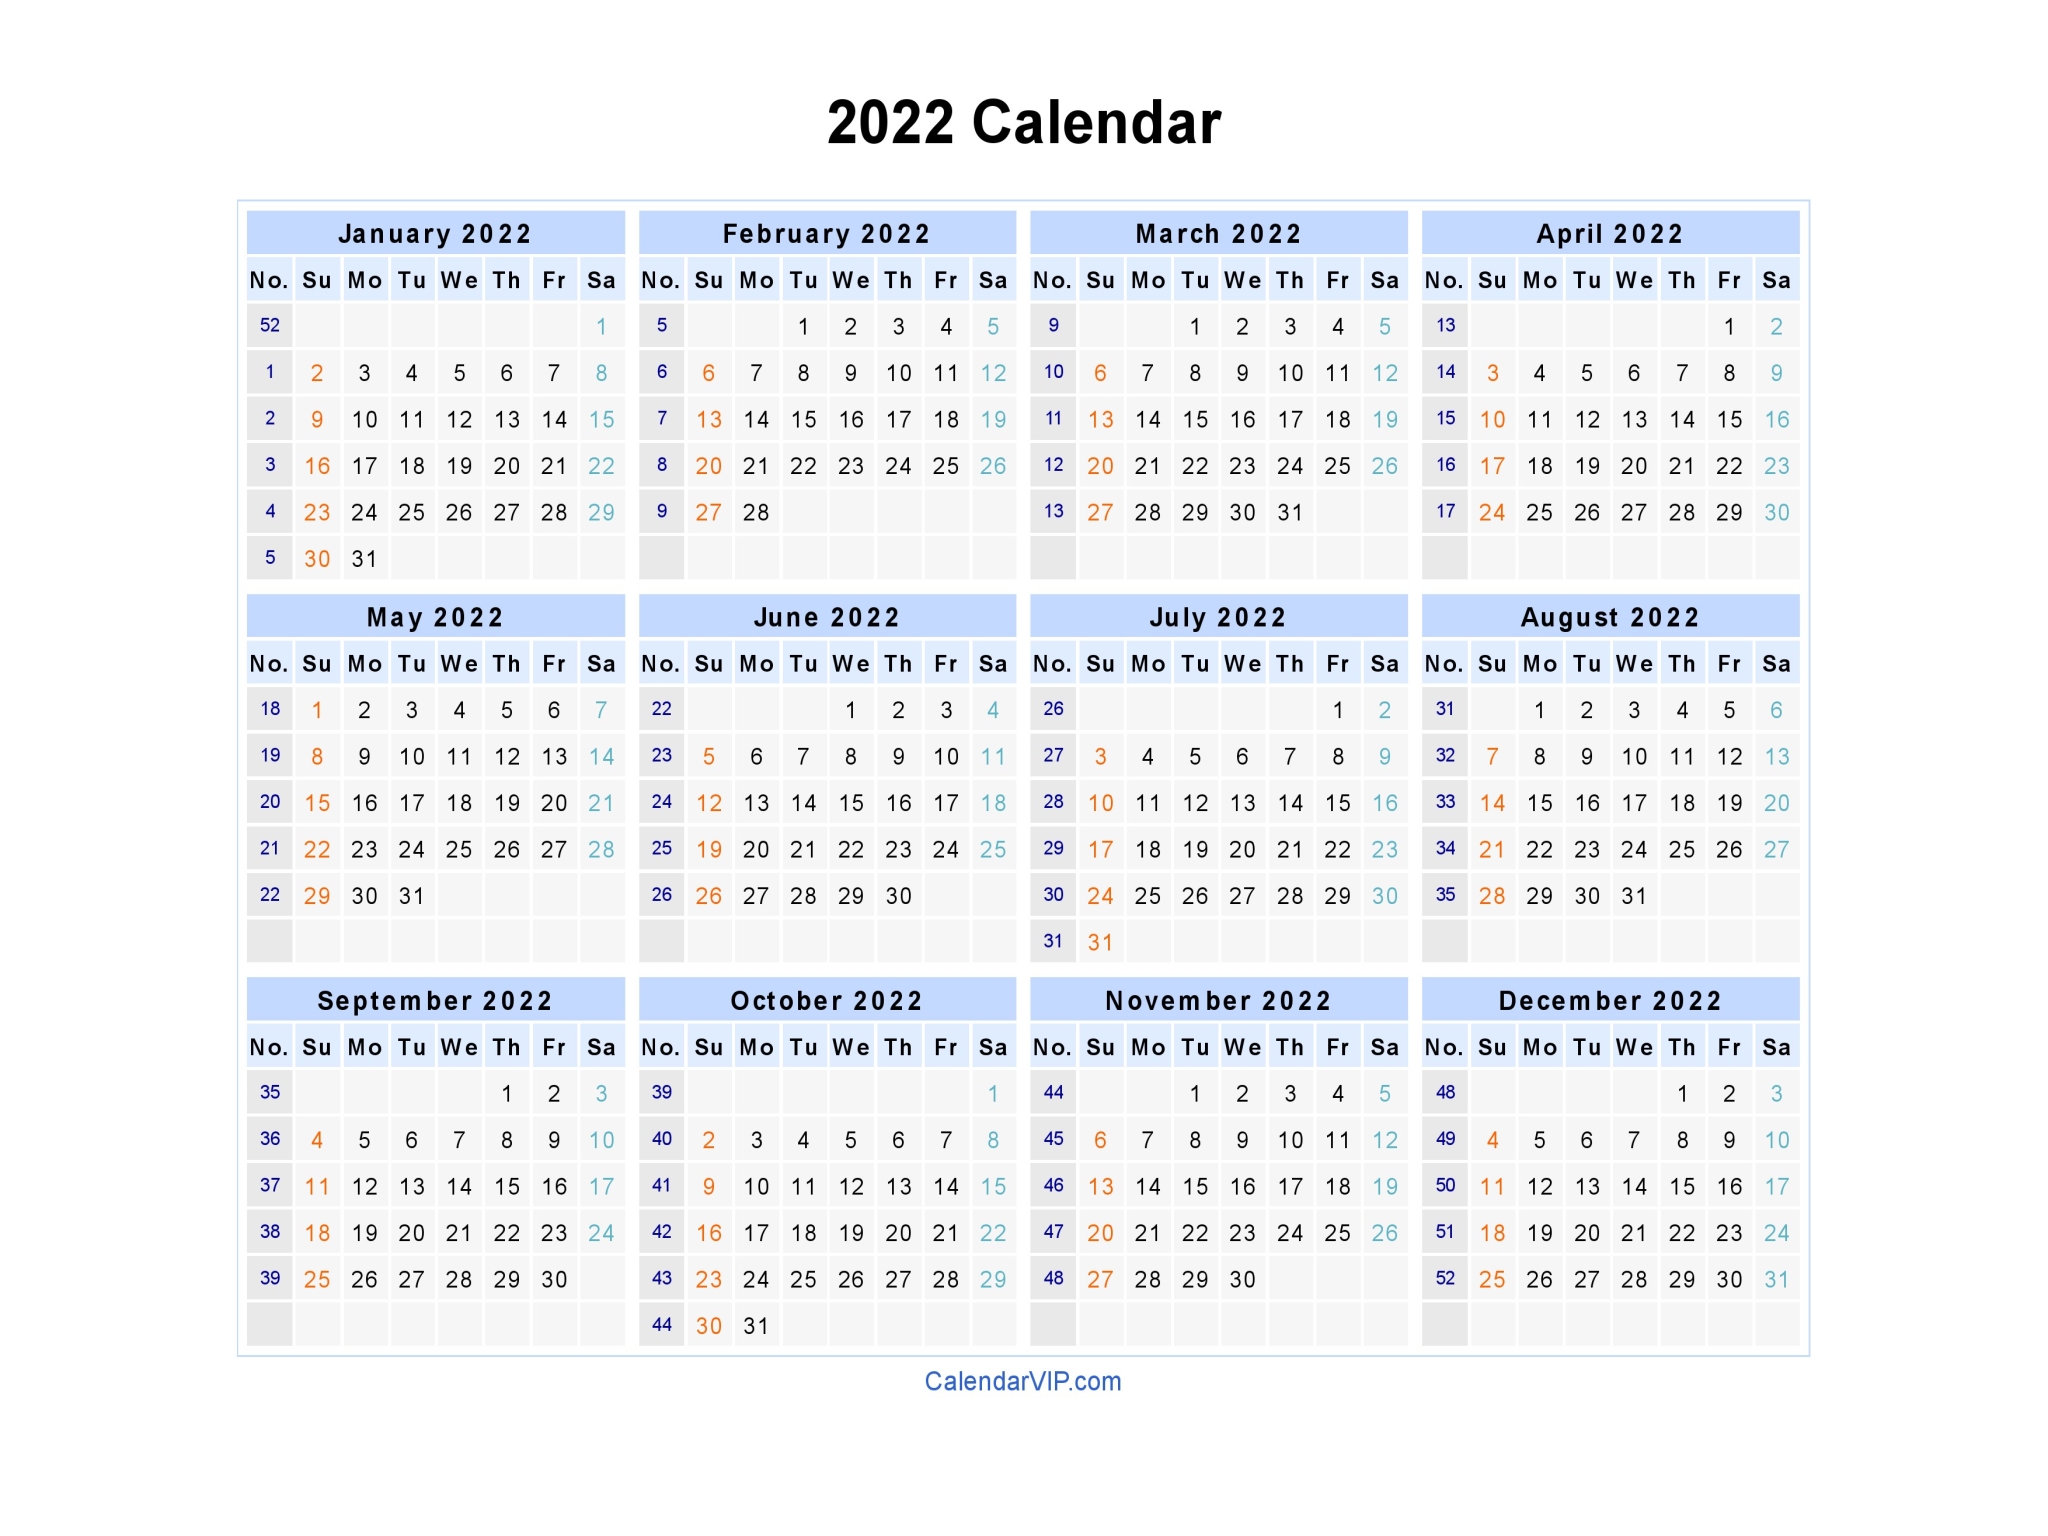 2022 Calendar - Blank Printable Calendar Template in PDF ...